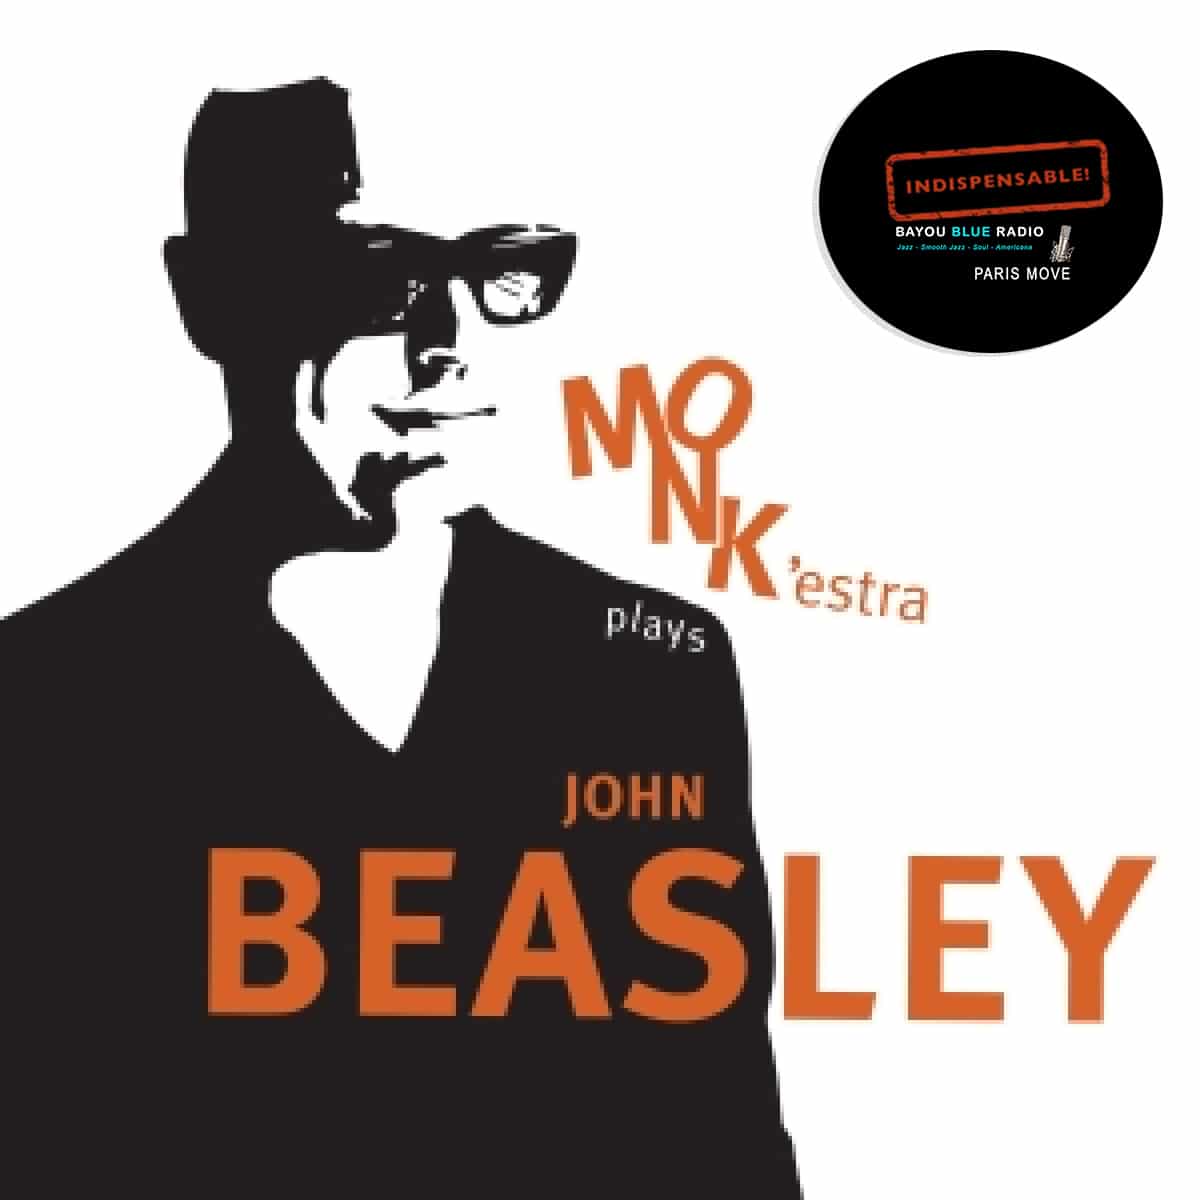 John Beasley – Monk’estra plays John Beasley